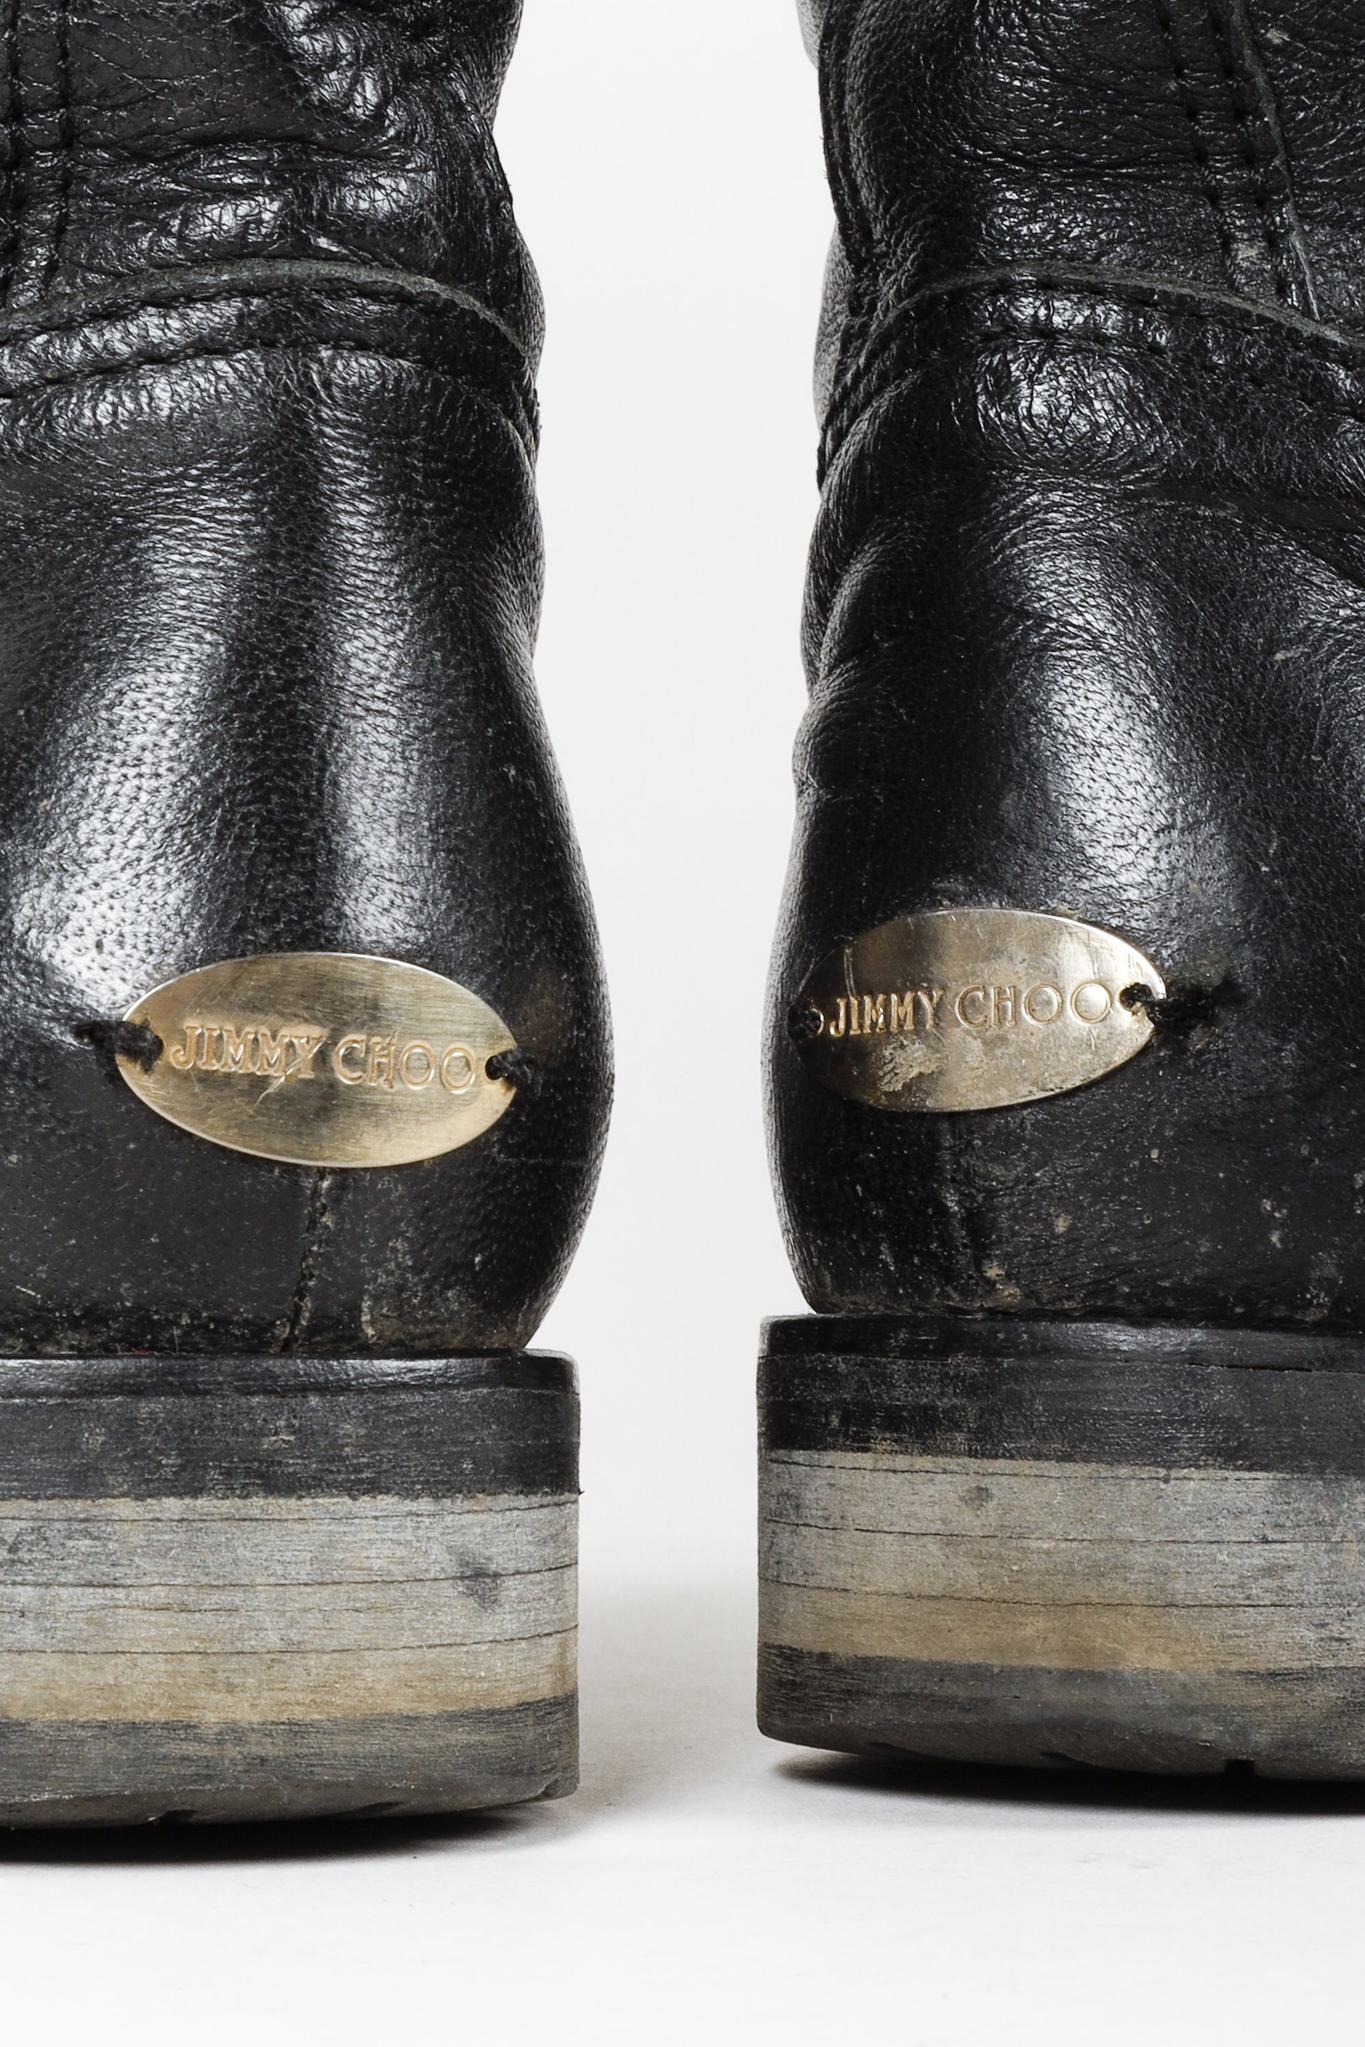 Jimmy Choo Black Biker Buckled Leather Boots